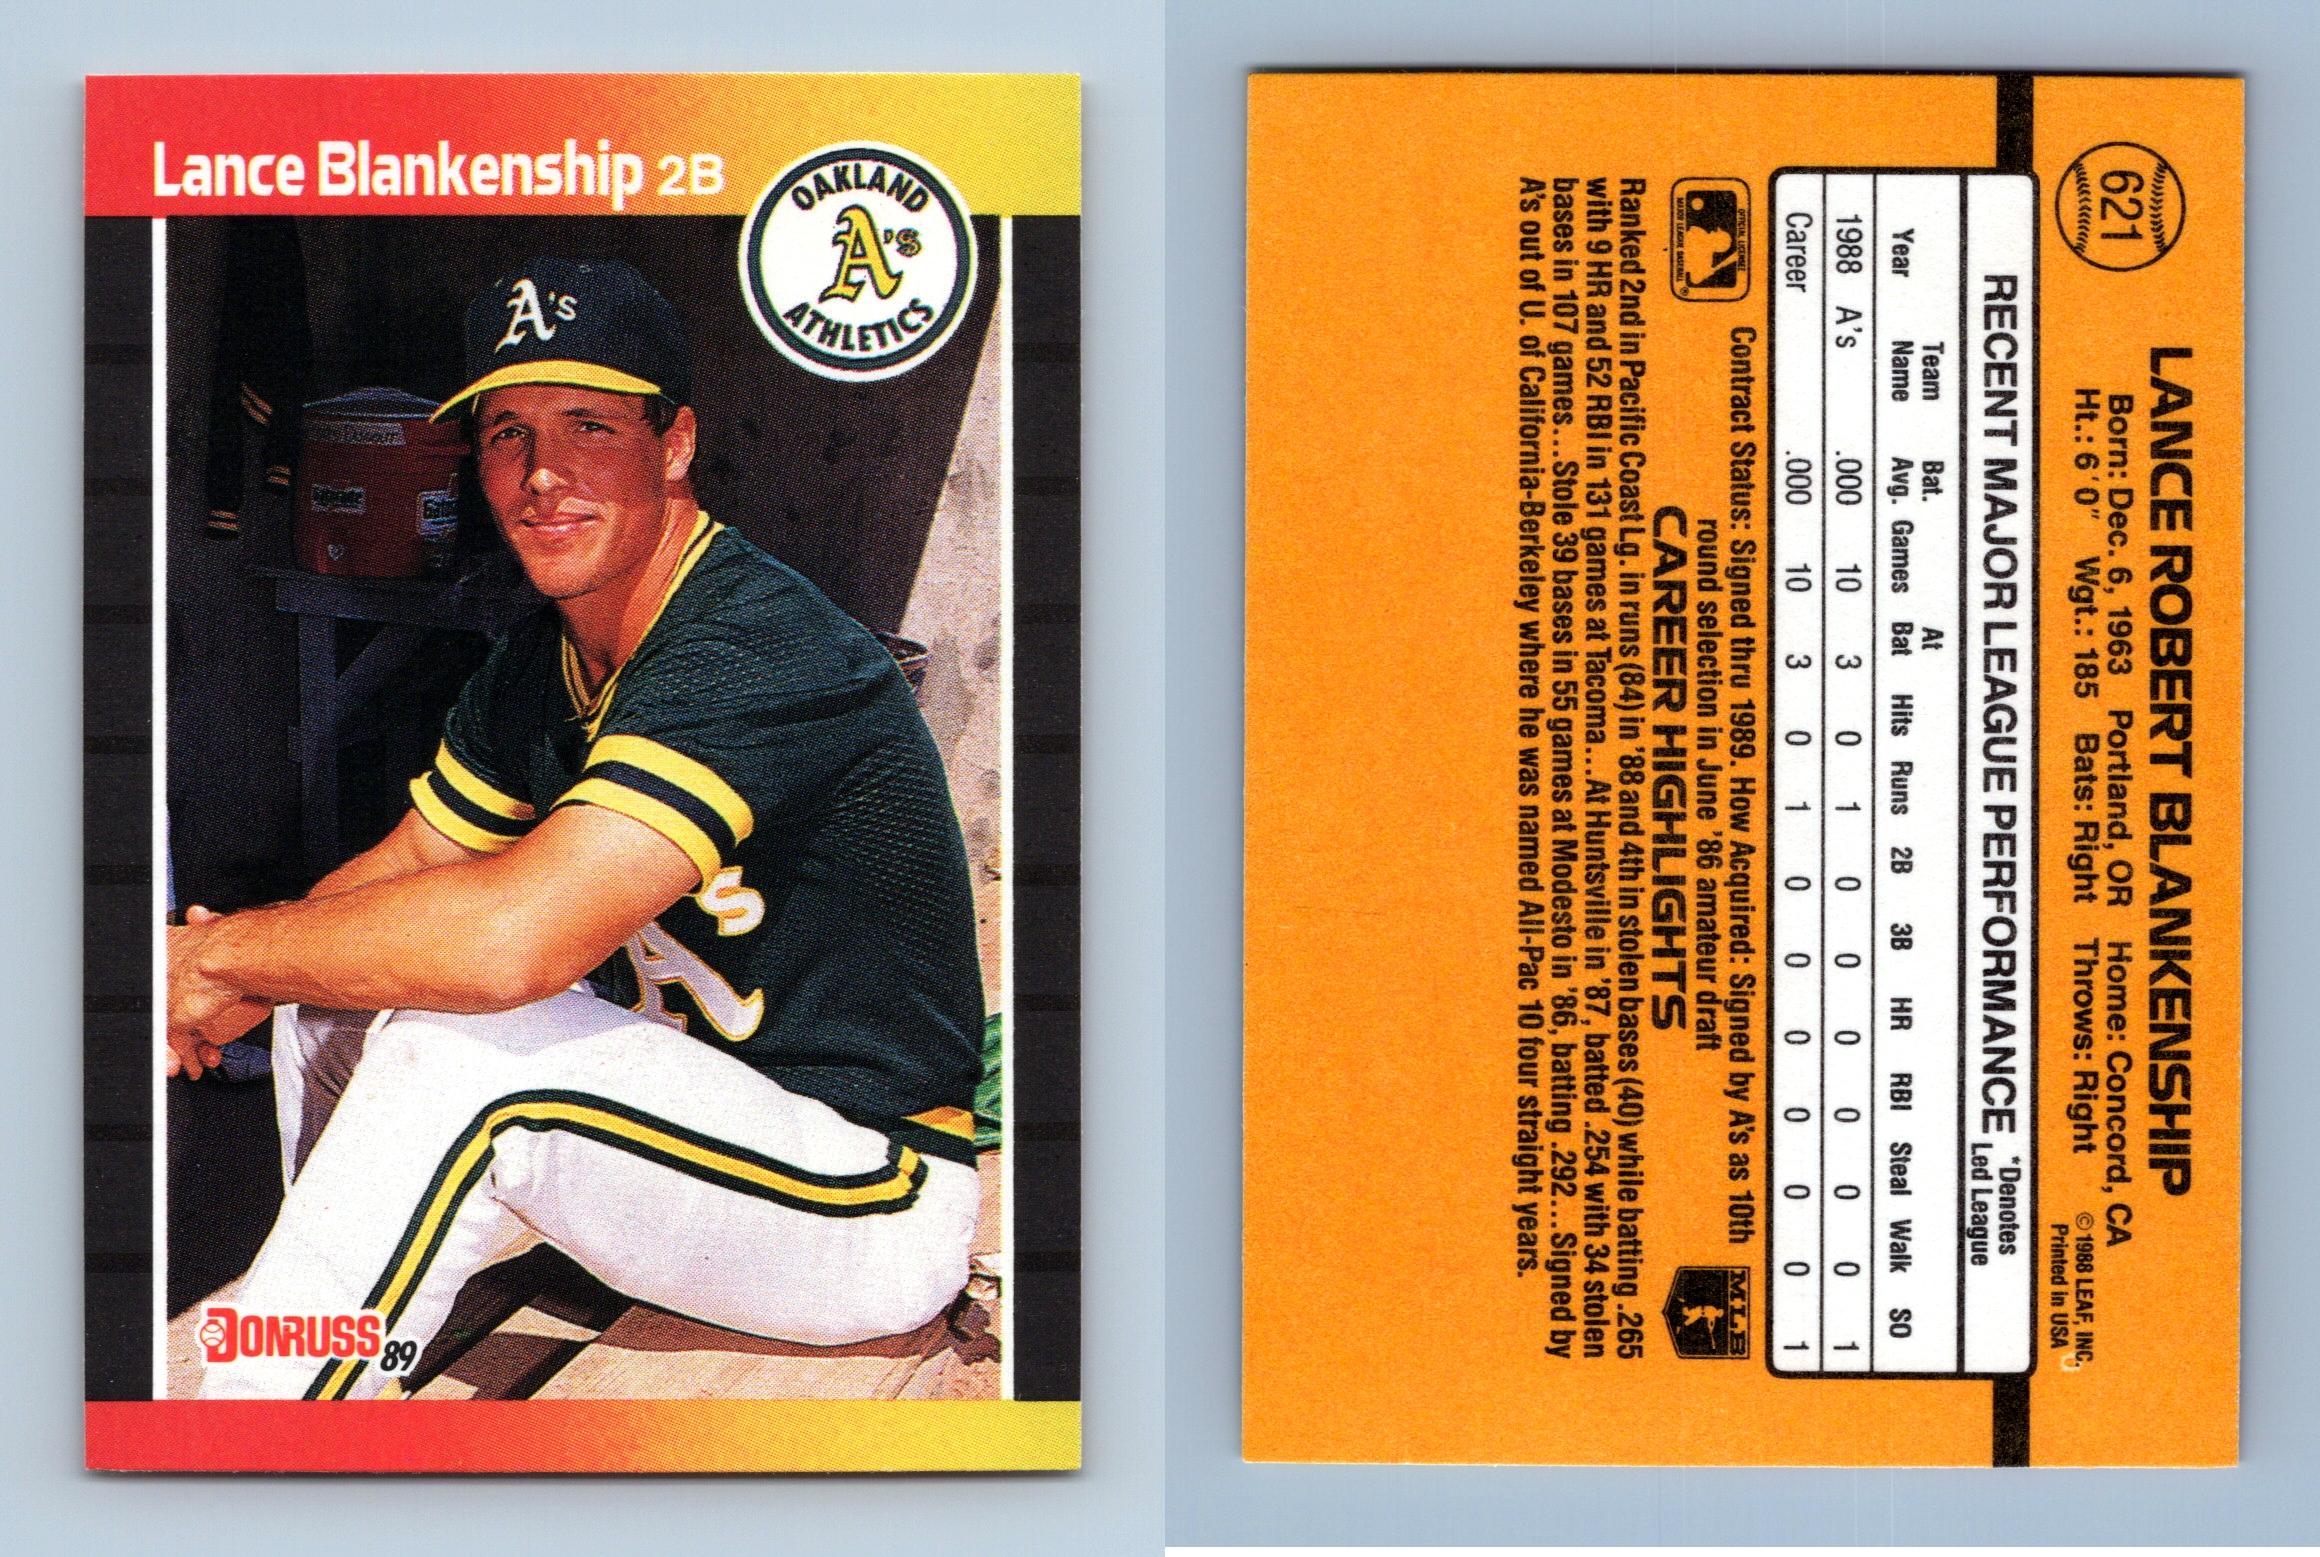  1989 Donruss Baseball Rookie Card #523 Mark Lemke